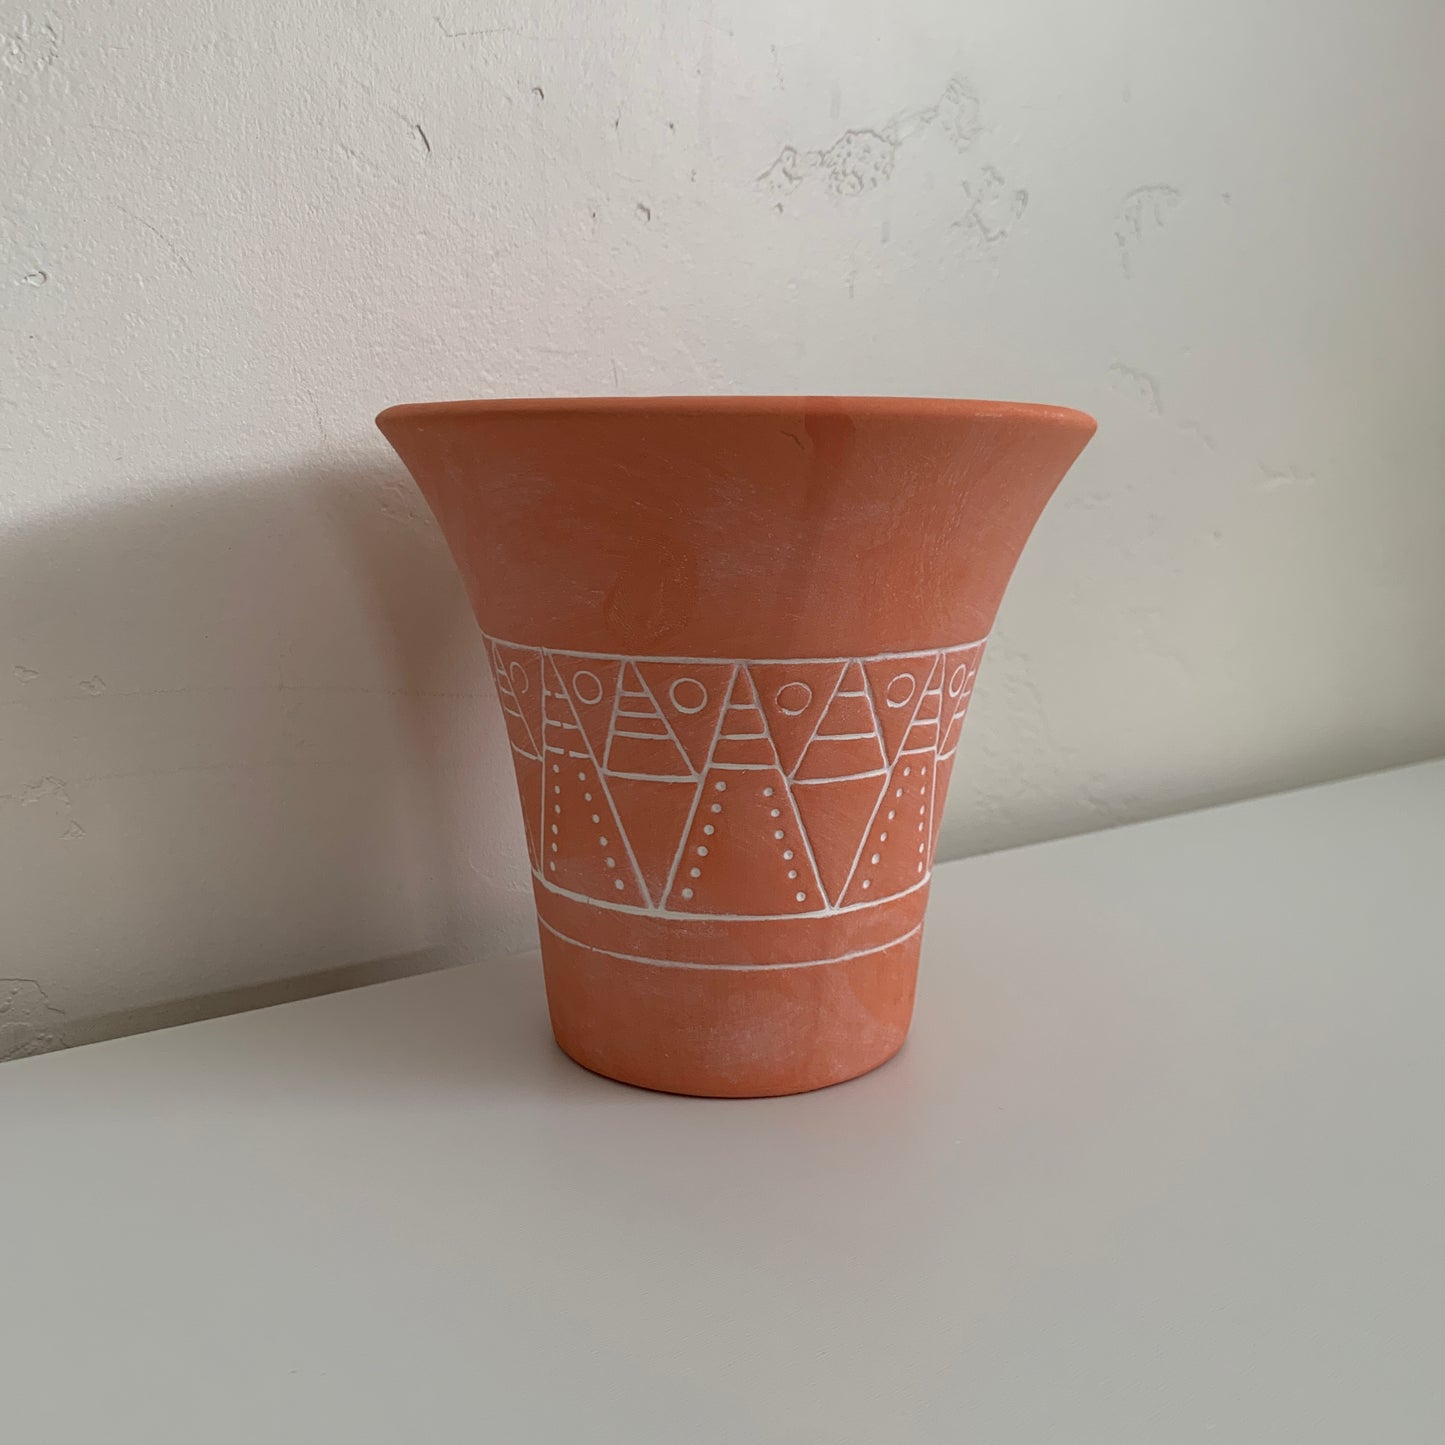 Pots & Planters | Terracotta Horn Vase | Loomshine